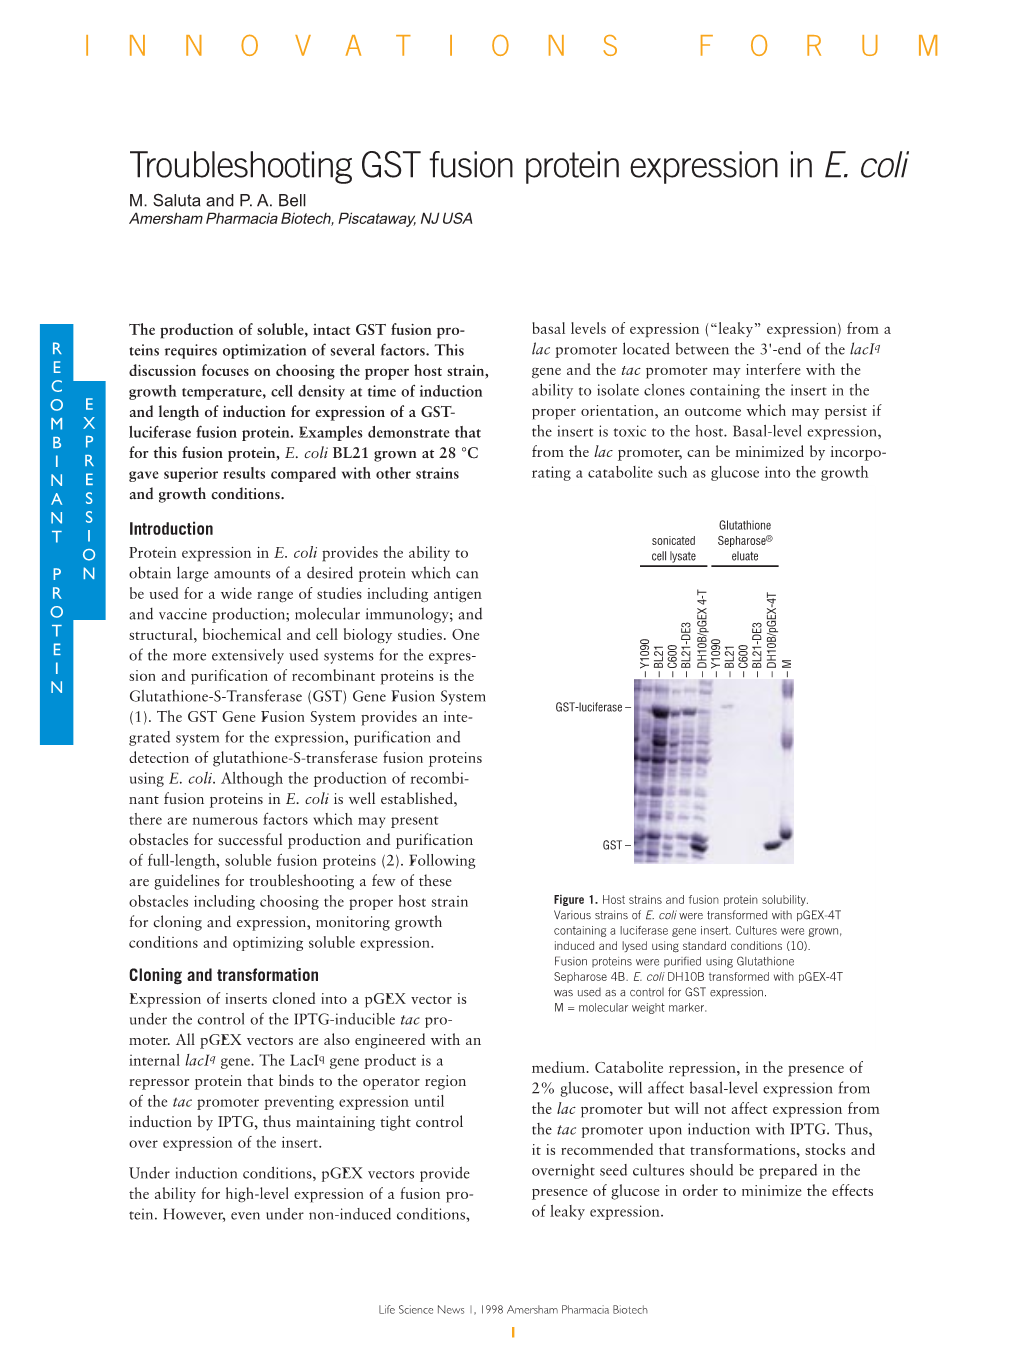 [PDF] Troubleshooting GST Fusion Protein Expression in E. Coli